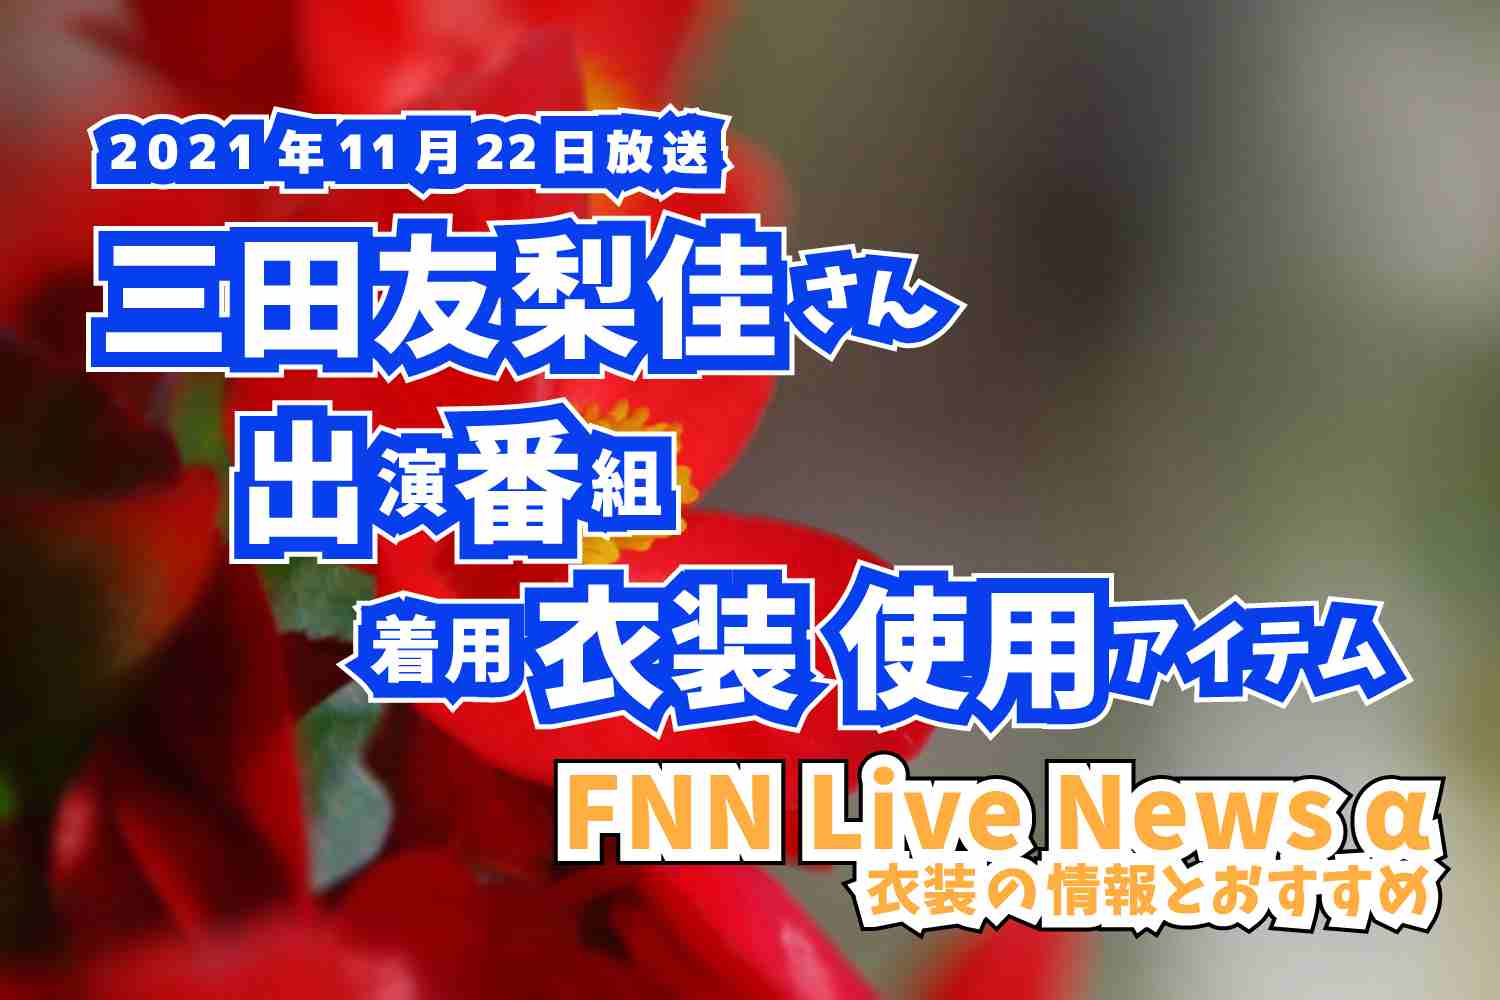 FNN Live News α　三田友梨佳さん　衣装　2021年11月23日放送